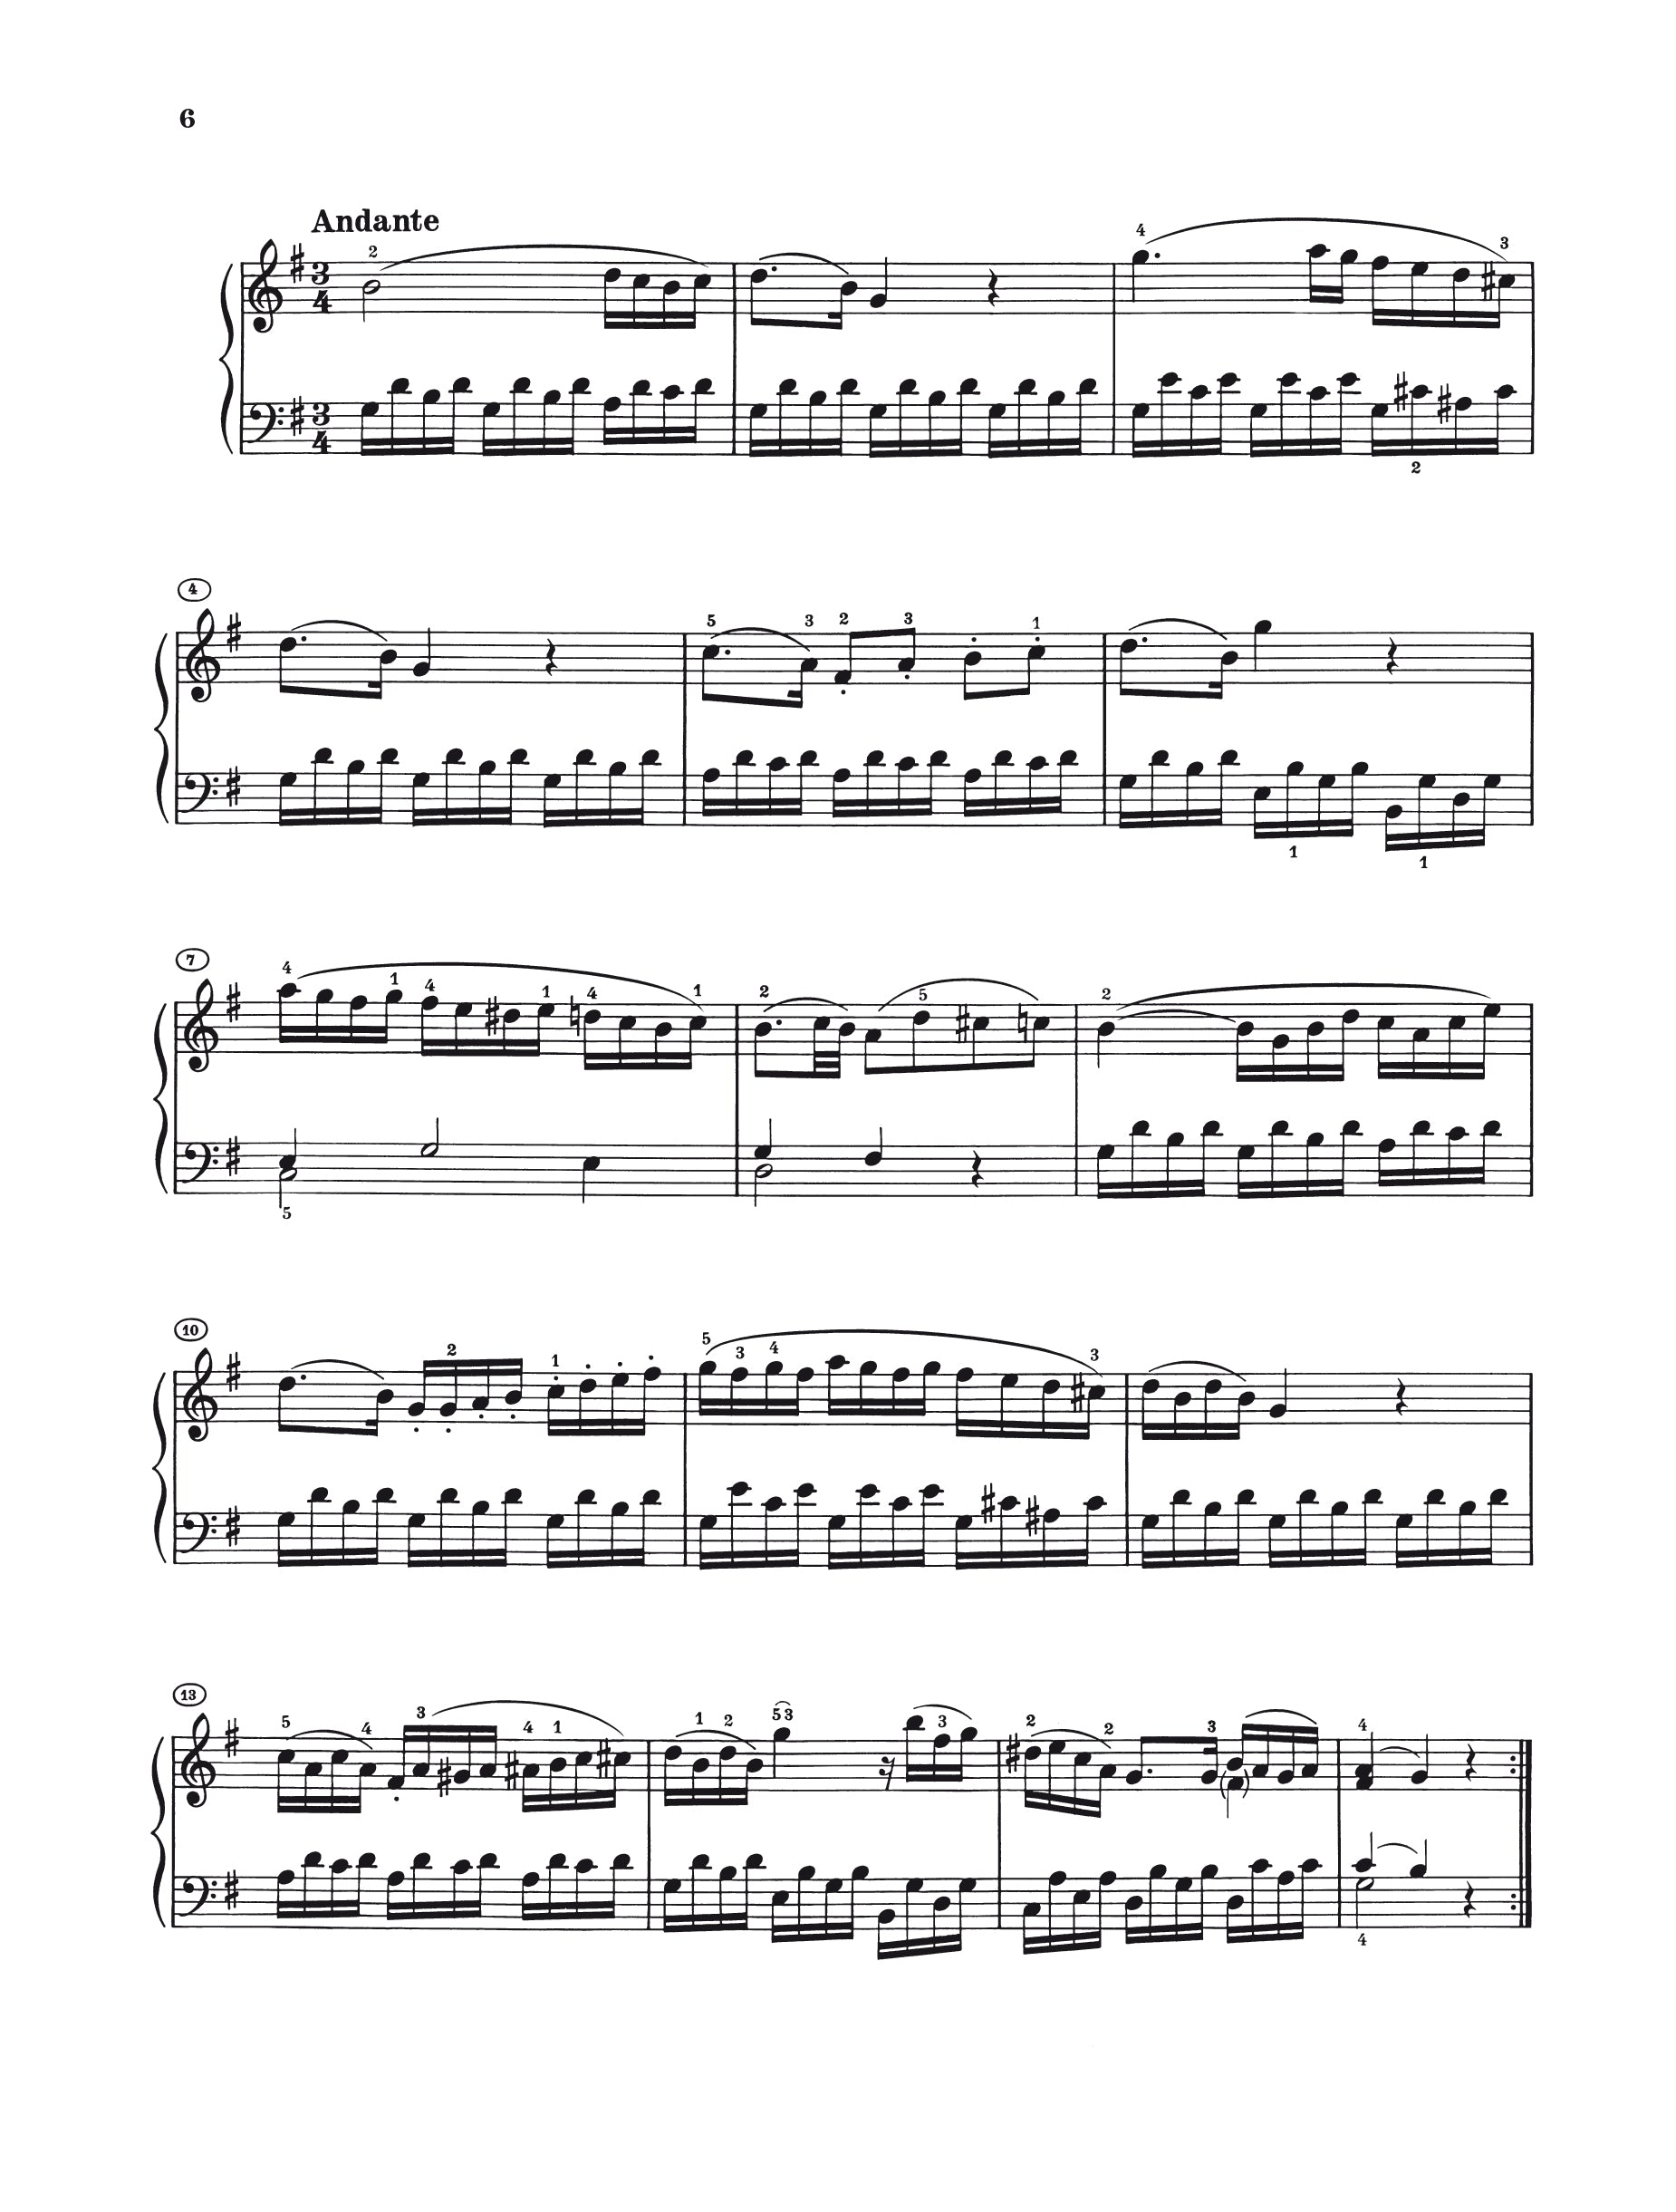 Mozart: Piano Sonata in C Major K 545